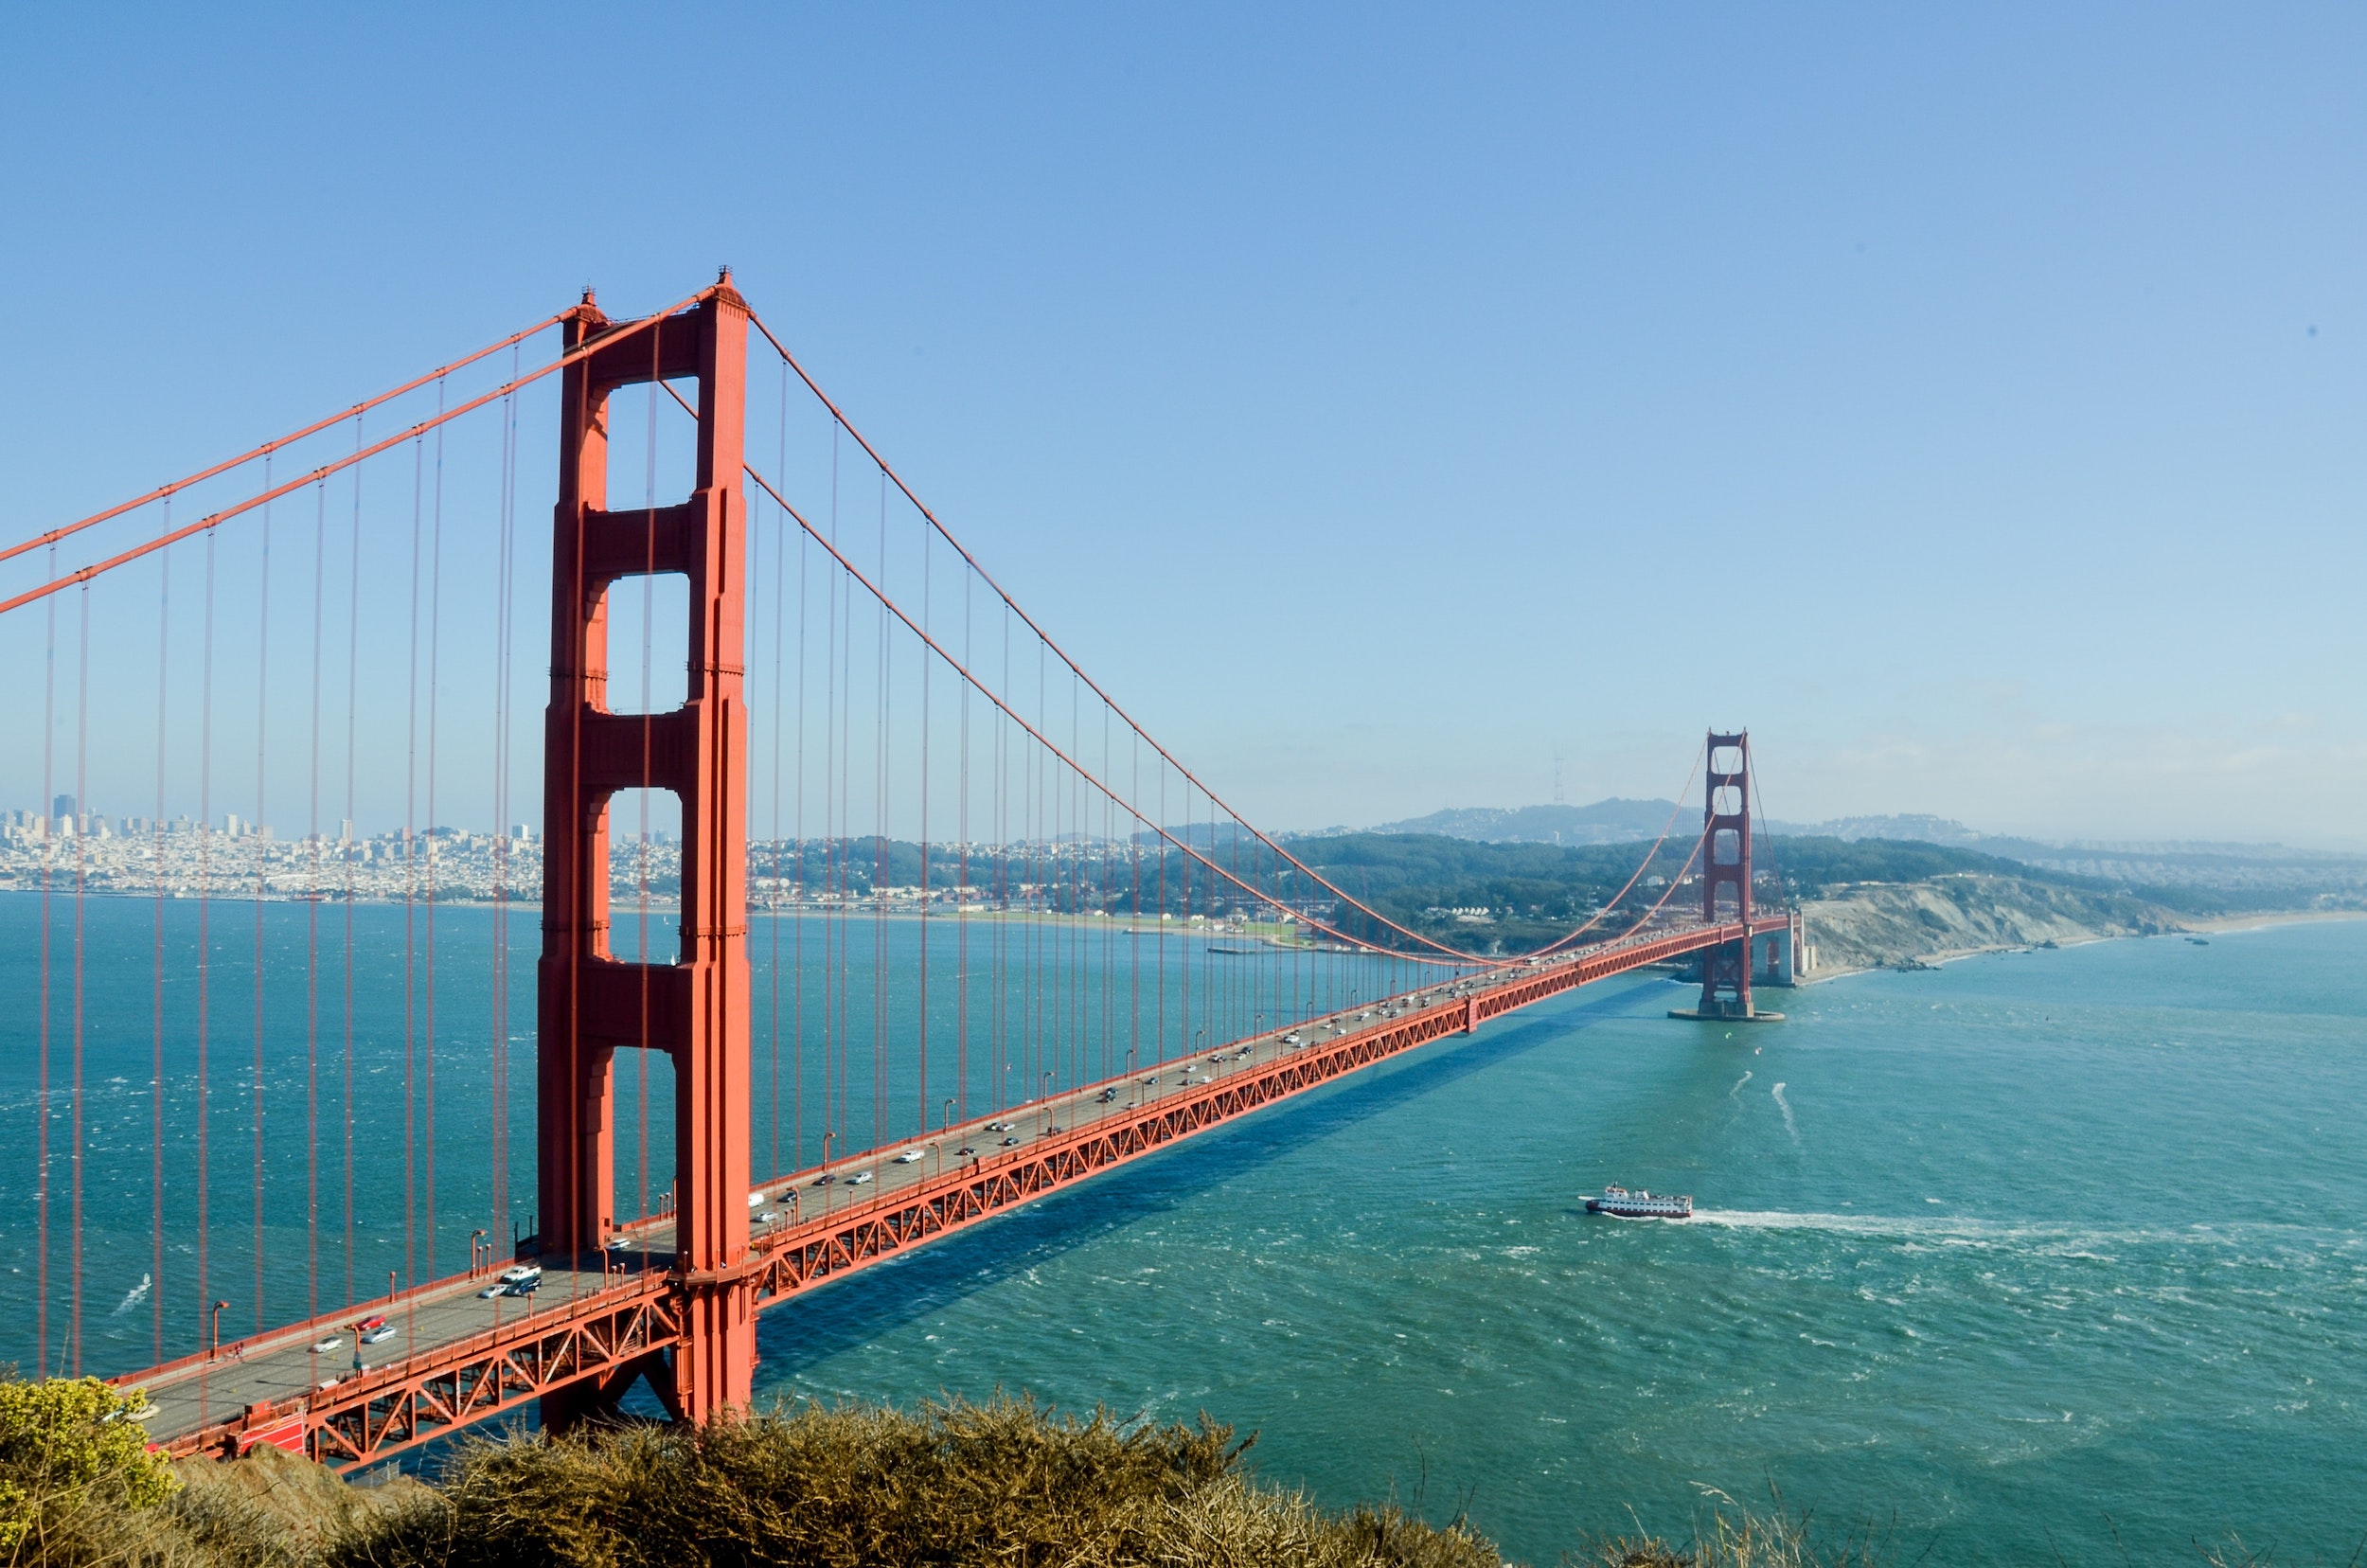 View of the Golden Gate Bridge